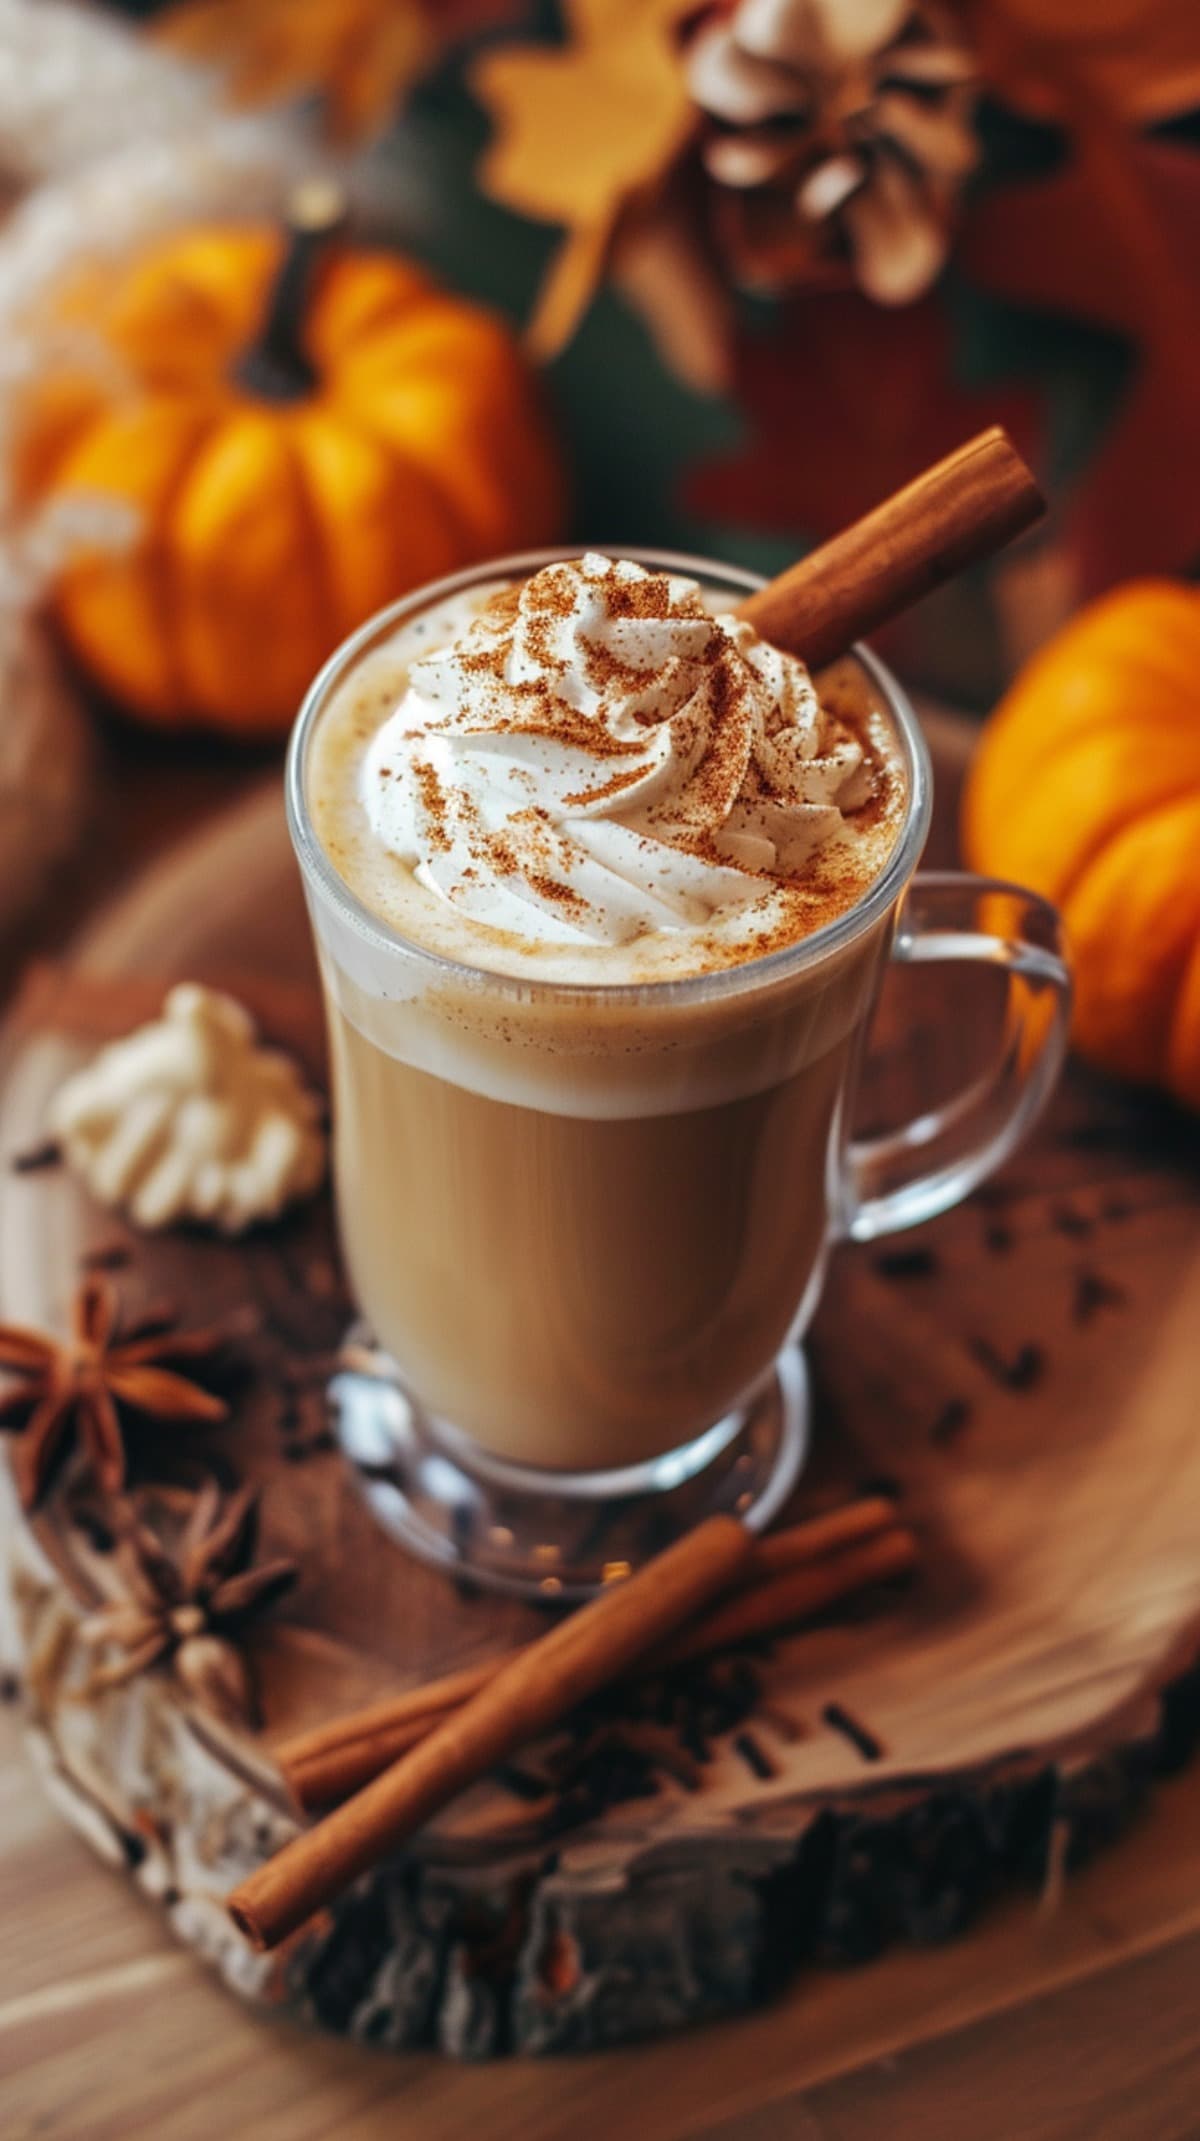 Copycat Starbucks Pumpkin Spice Latte Recipe